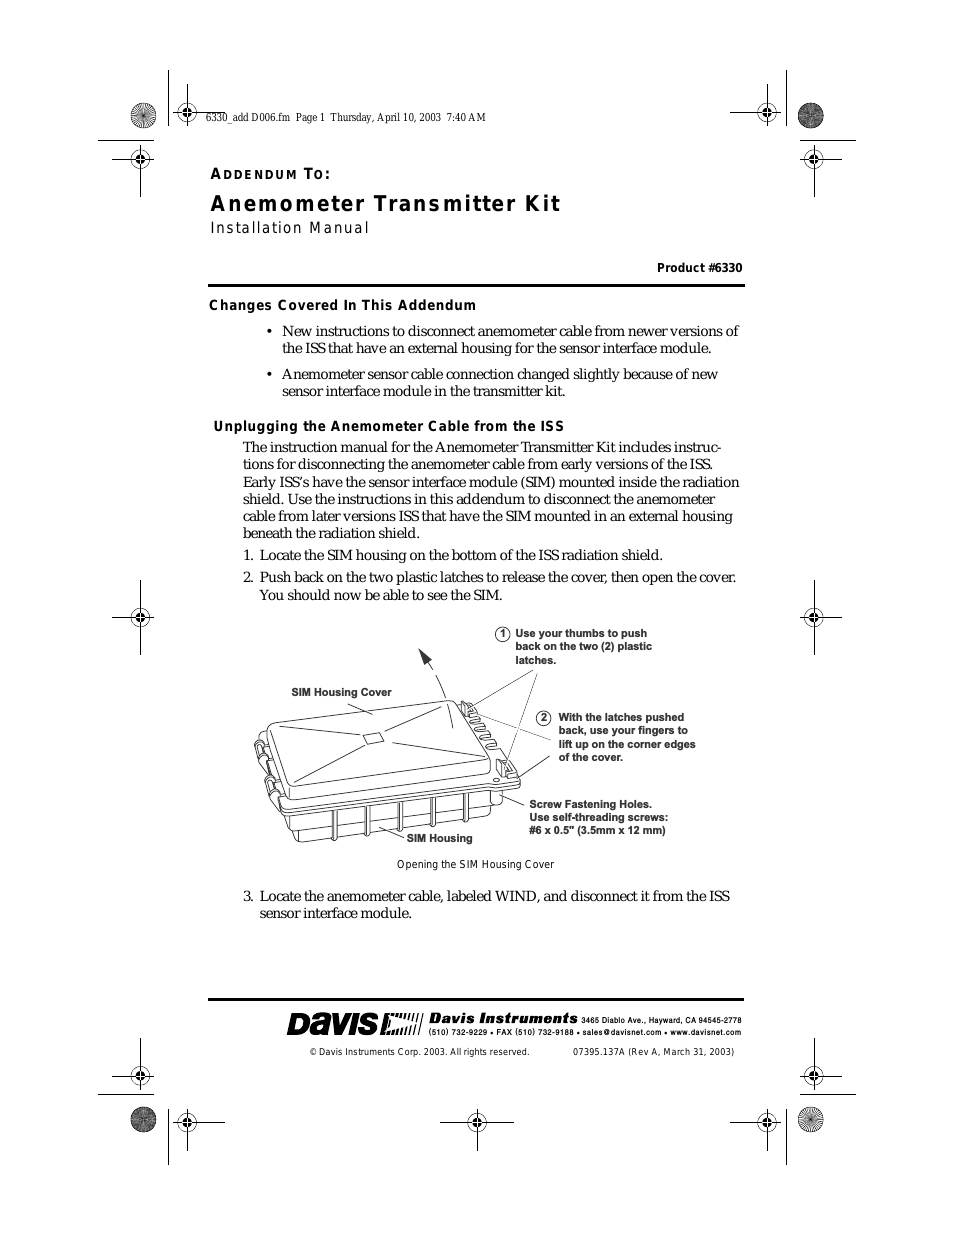 Anemometer Transmitter Kit Addendum